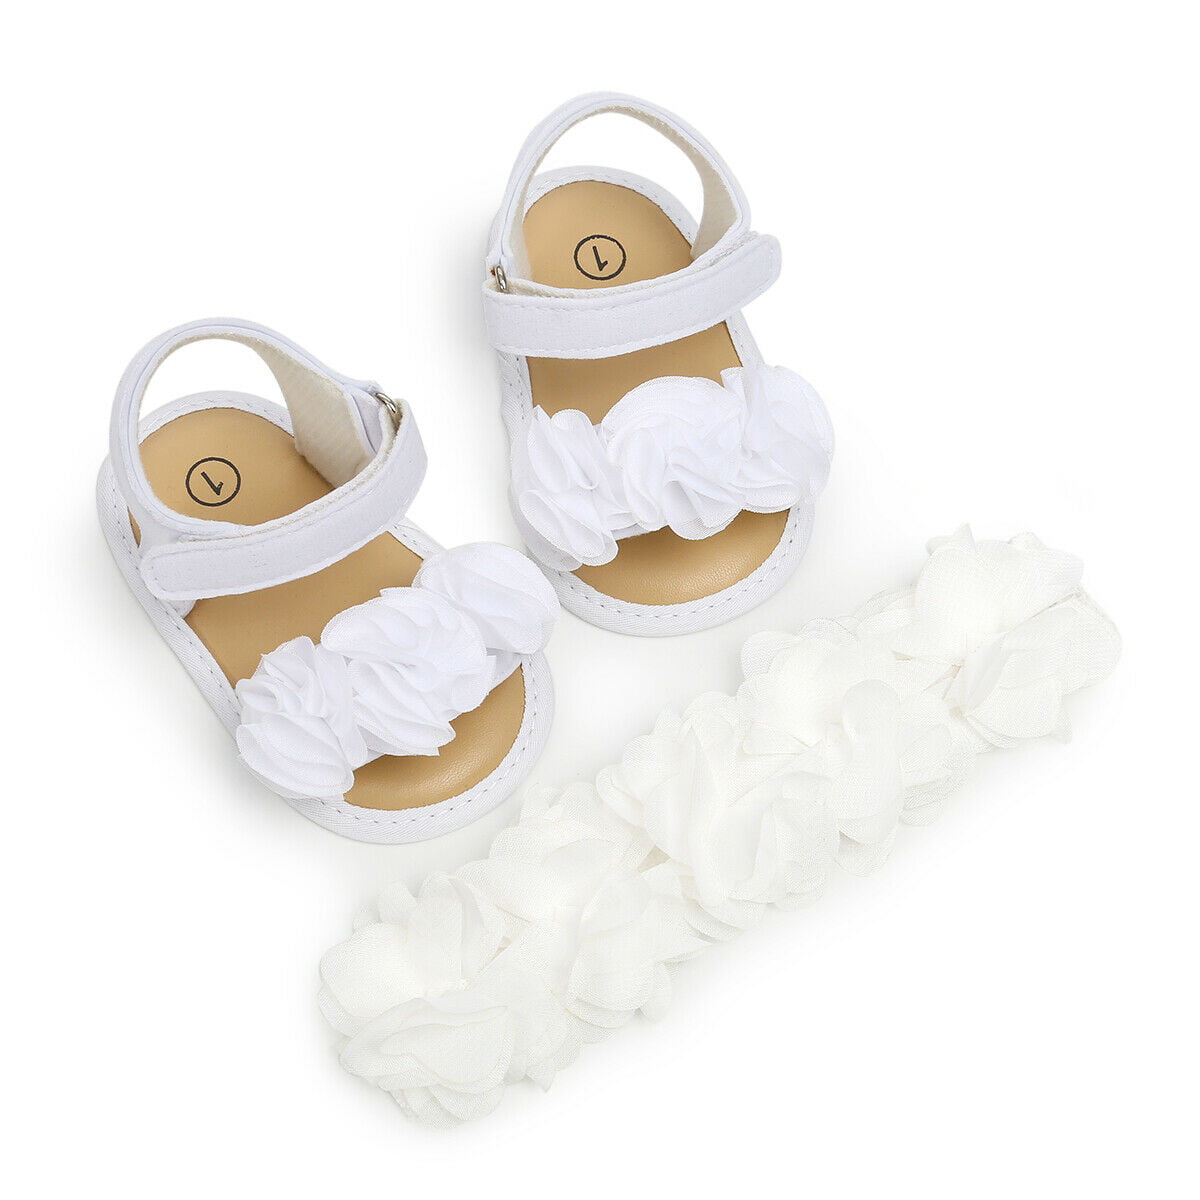 Infant Newborn Baby Sandals Soft Summer Crib Shoes Anti-slip Pram Prewalker 